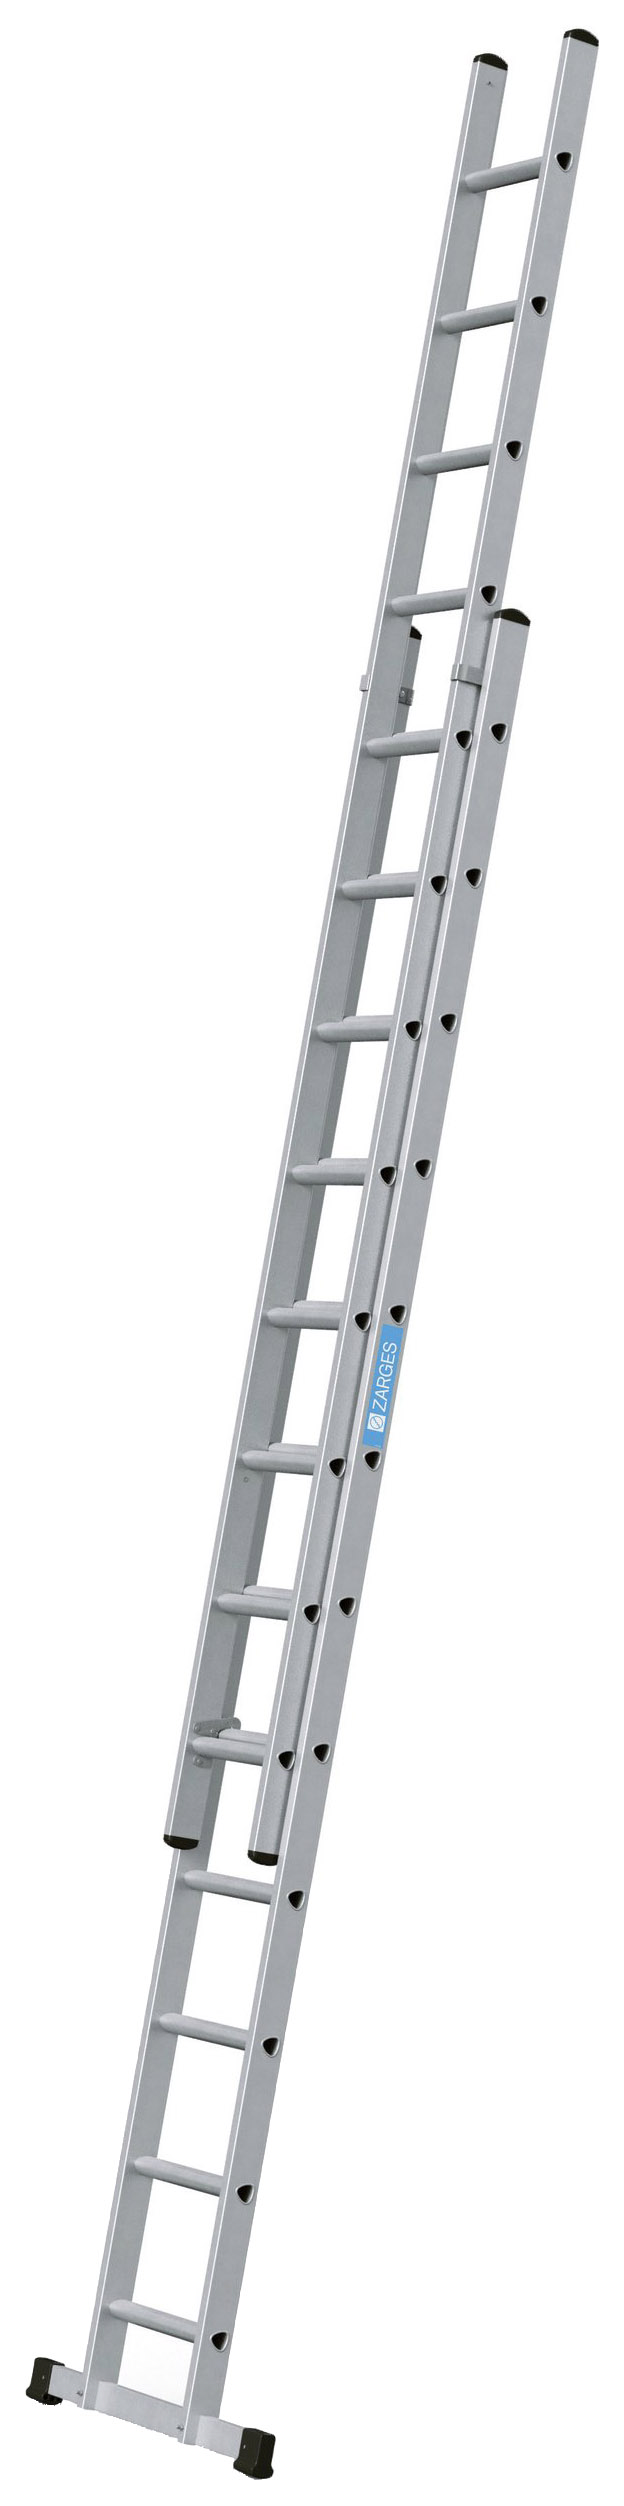 Zarges Everest 2 x 12 D-Rung Aluminium Double Extension Ladder - Max Height 6.05m